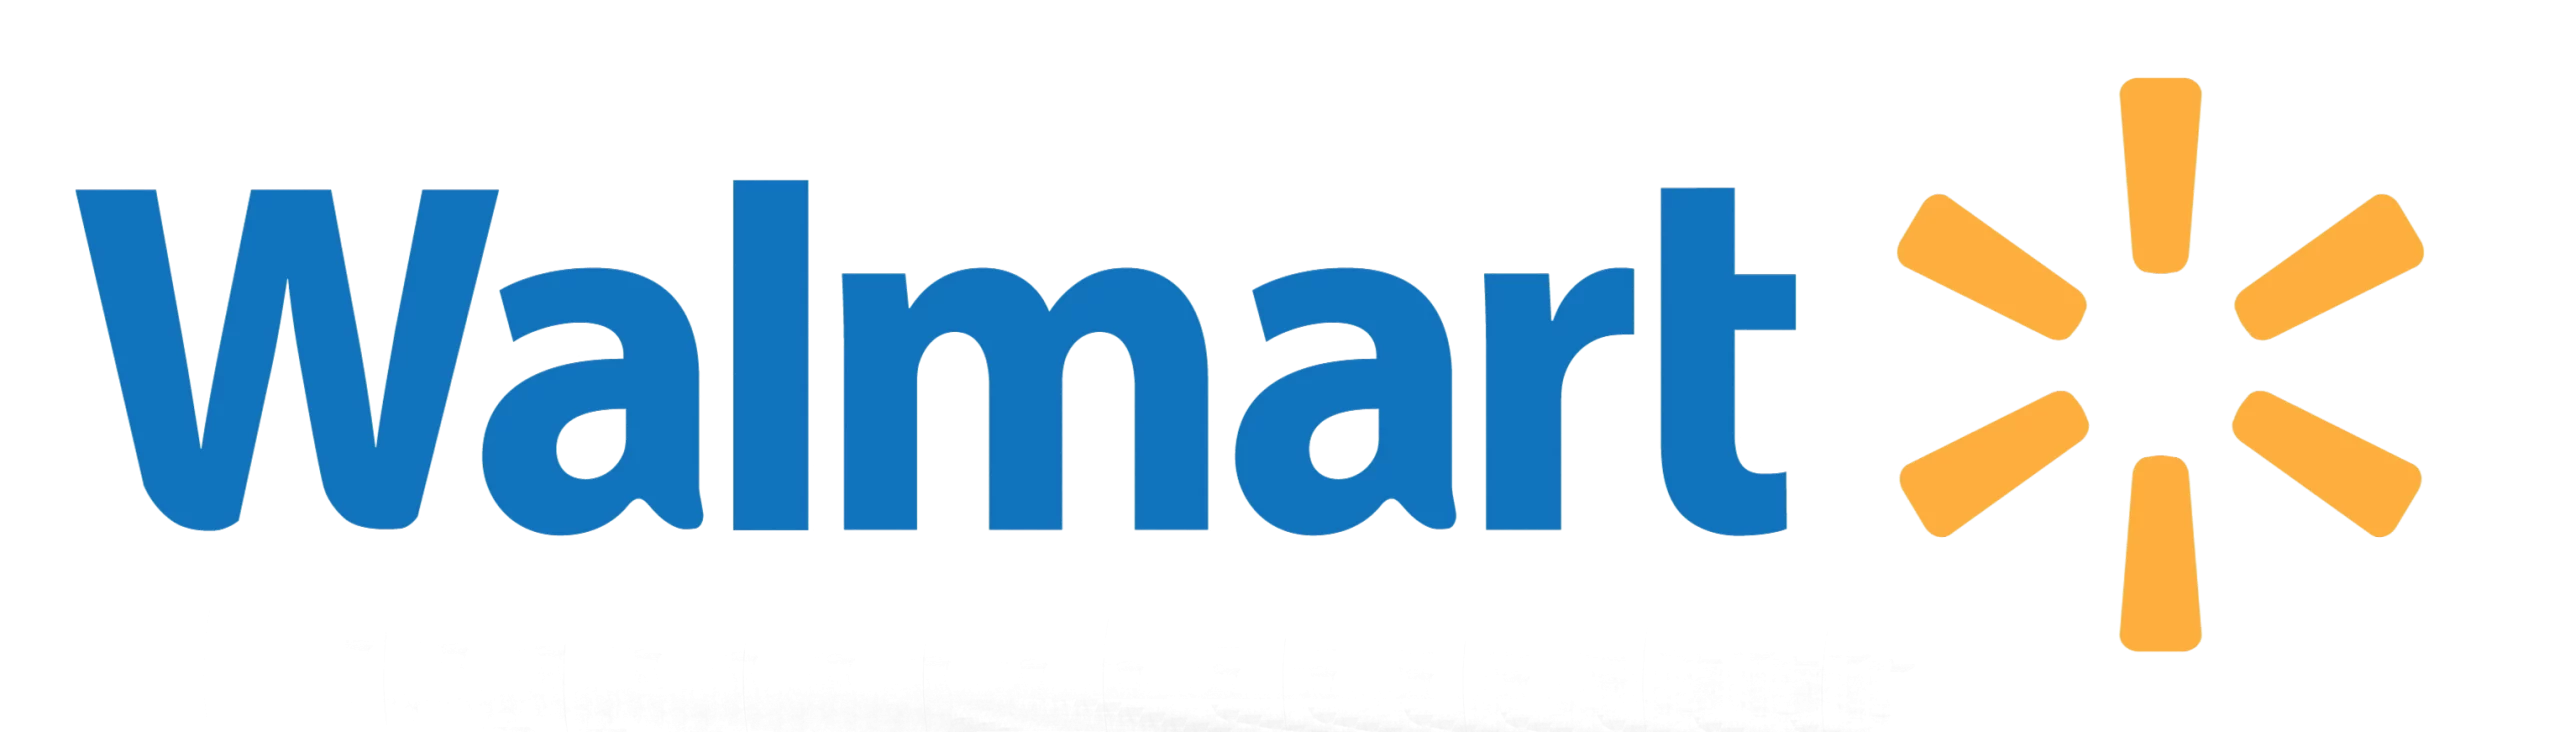 Walmart-Logo